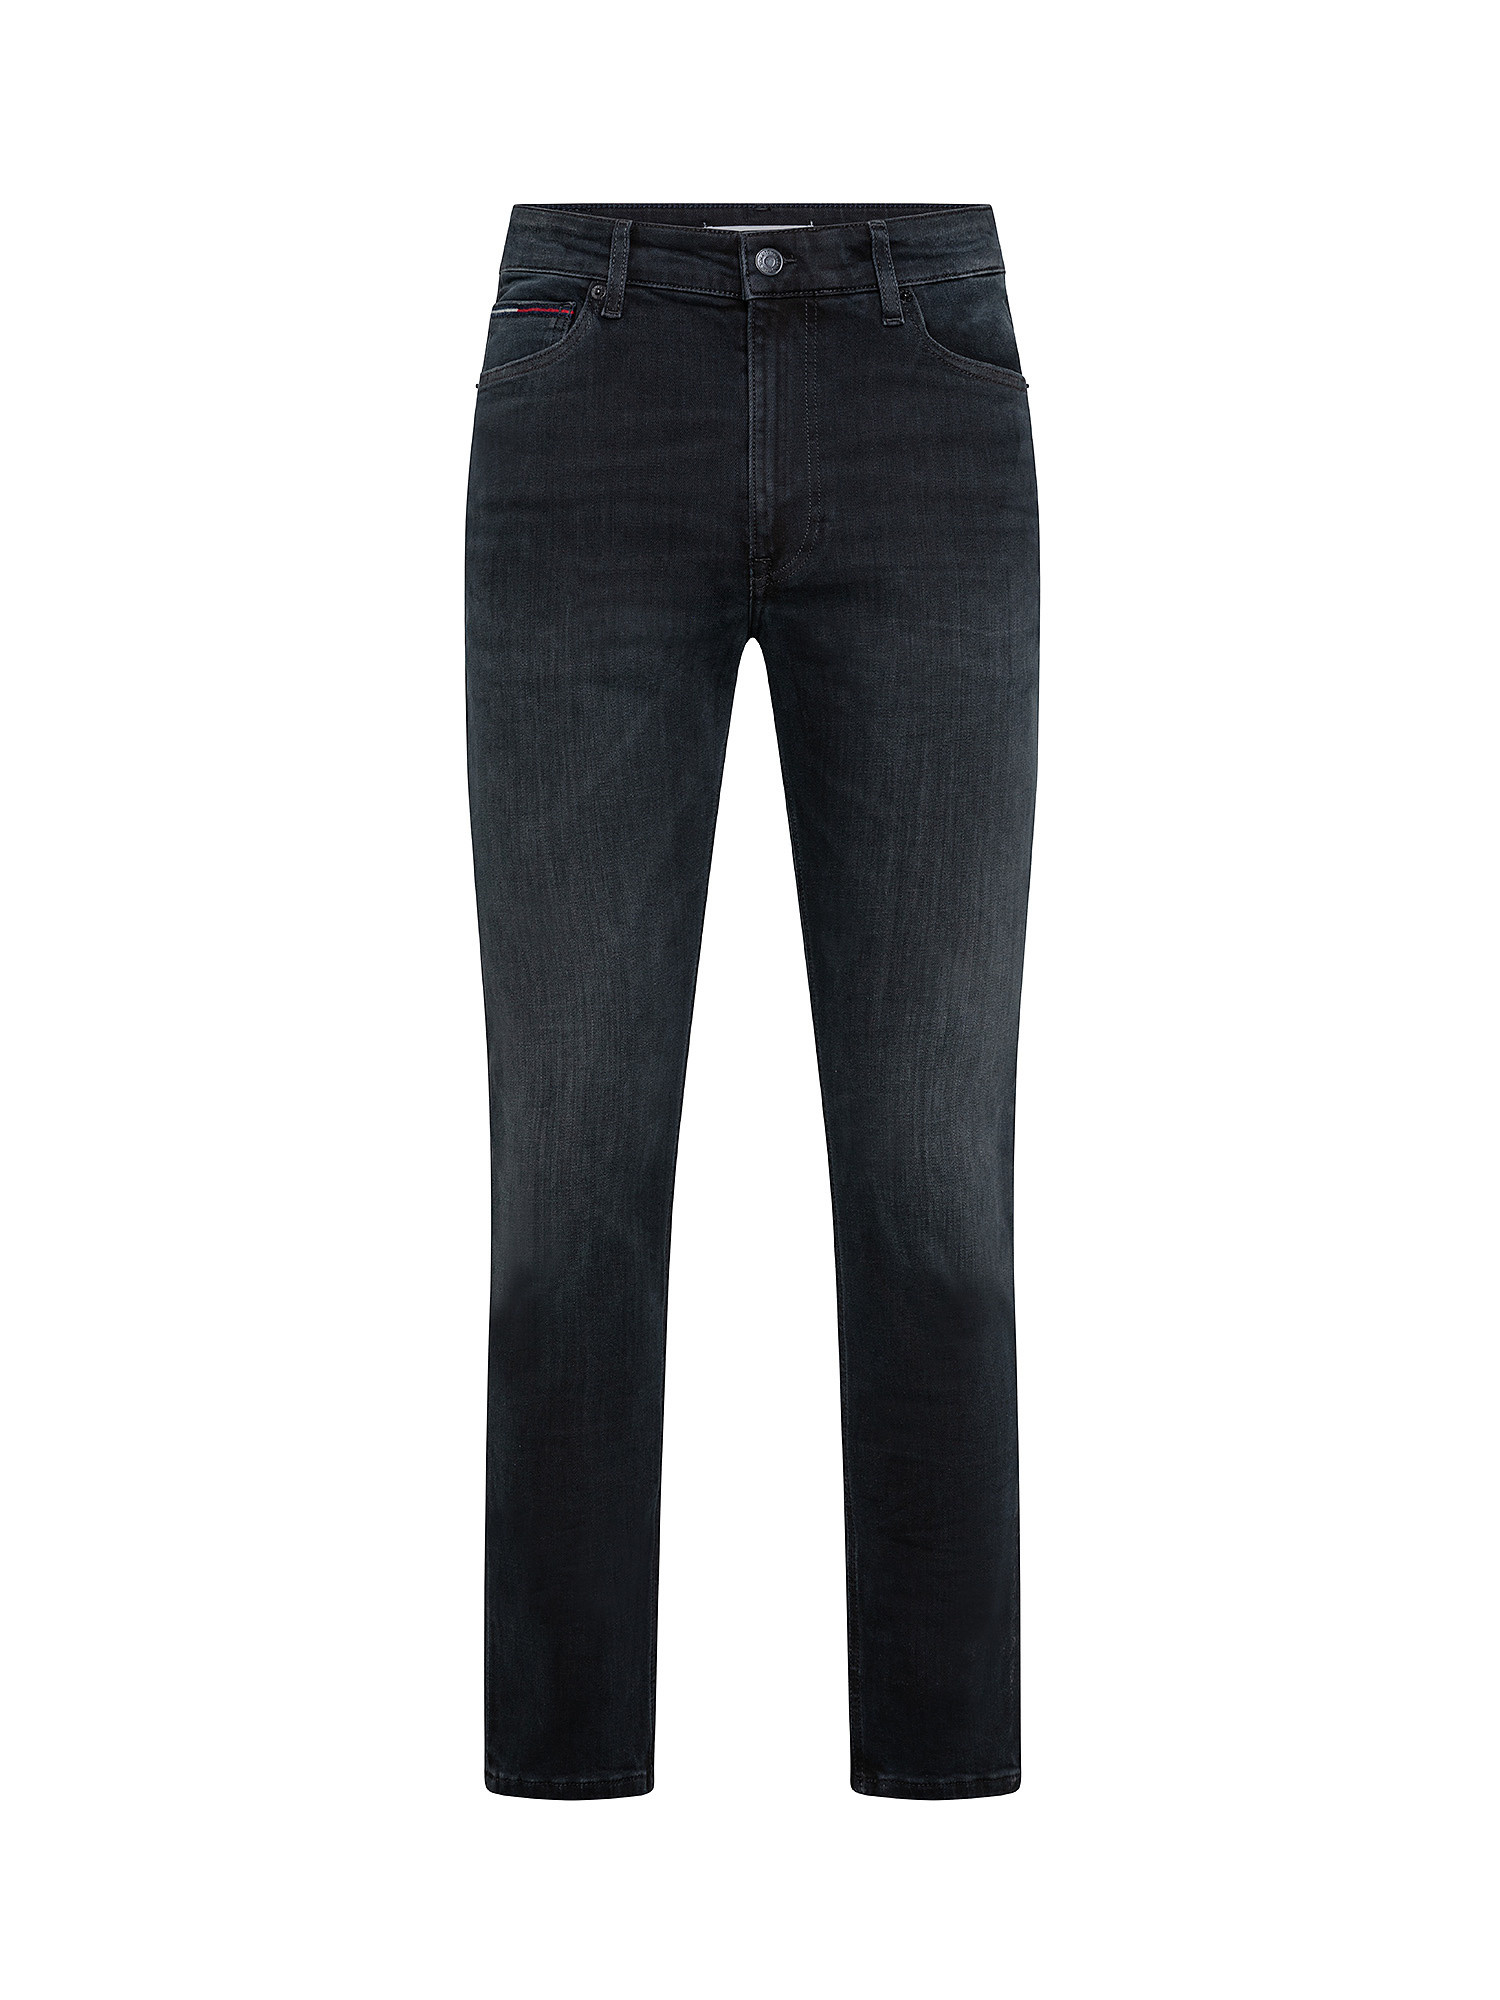 Simon skinny fit jeans, Black, large image number 0